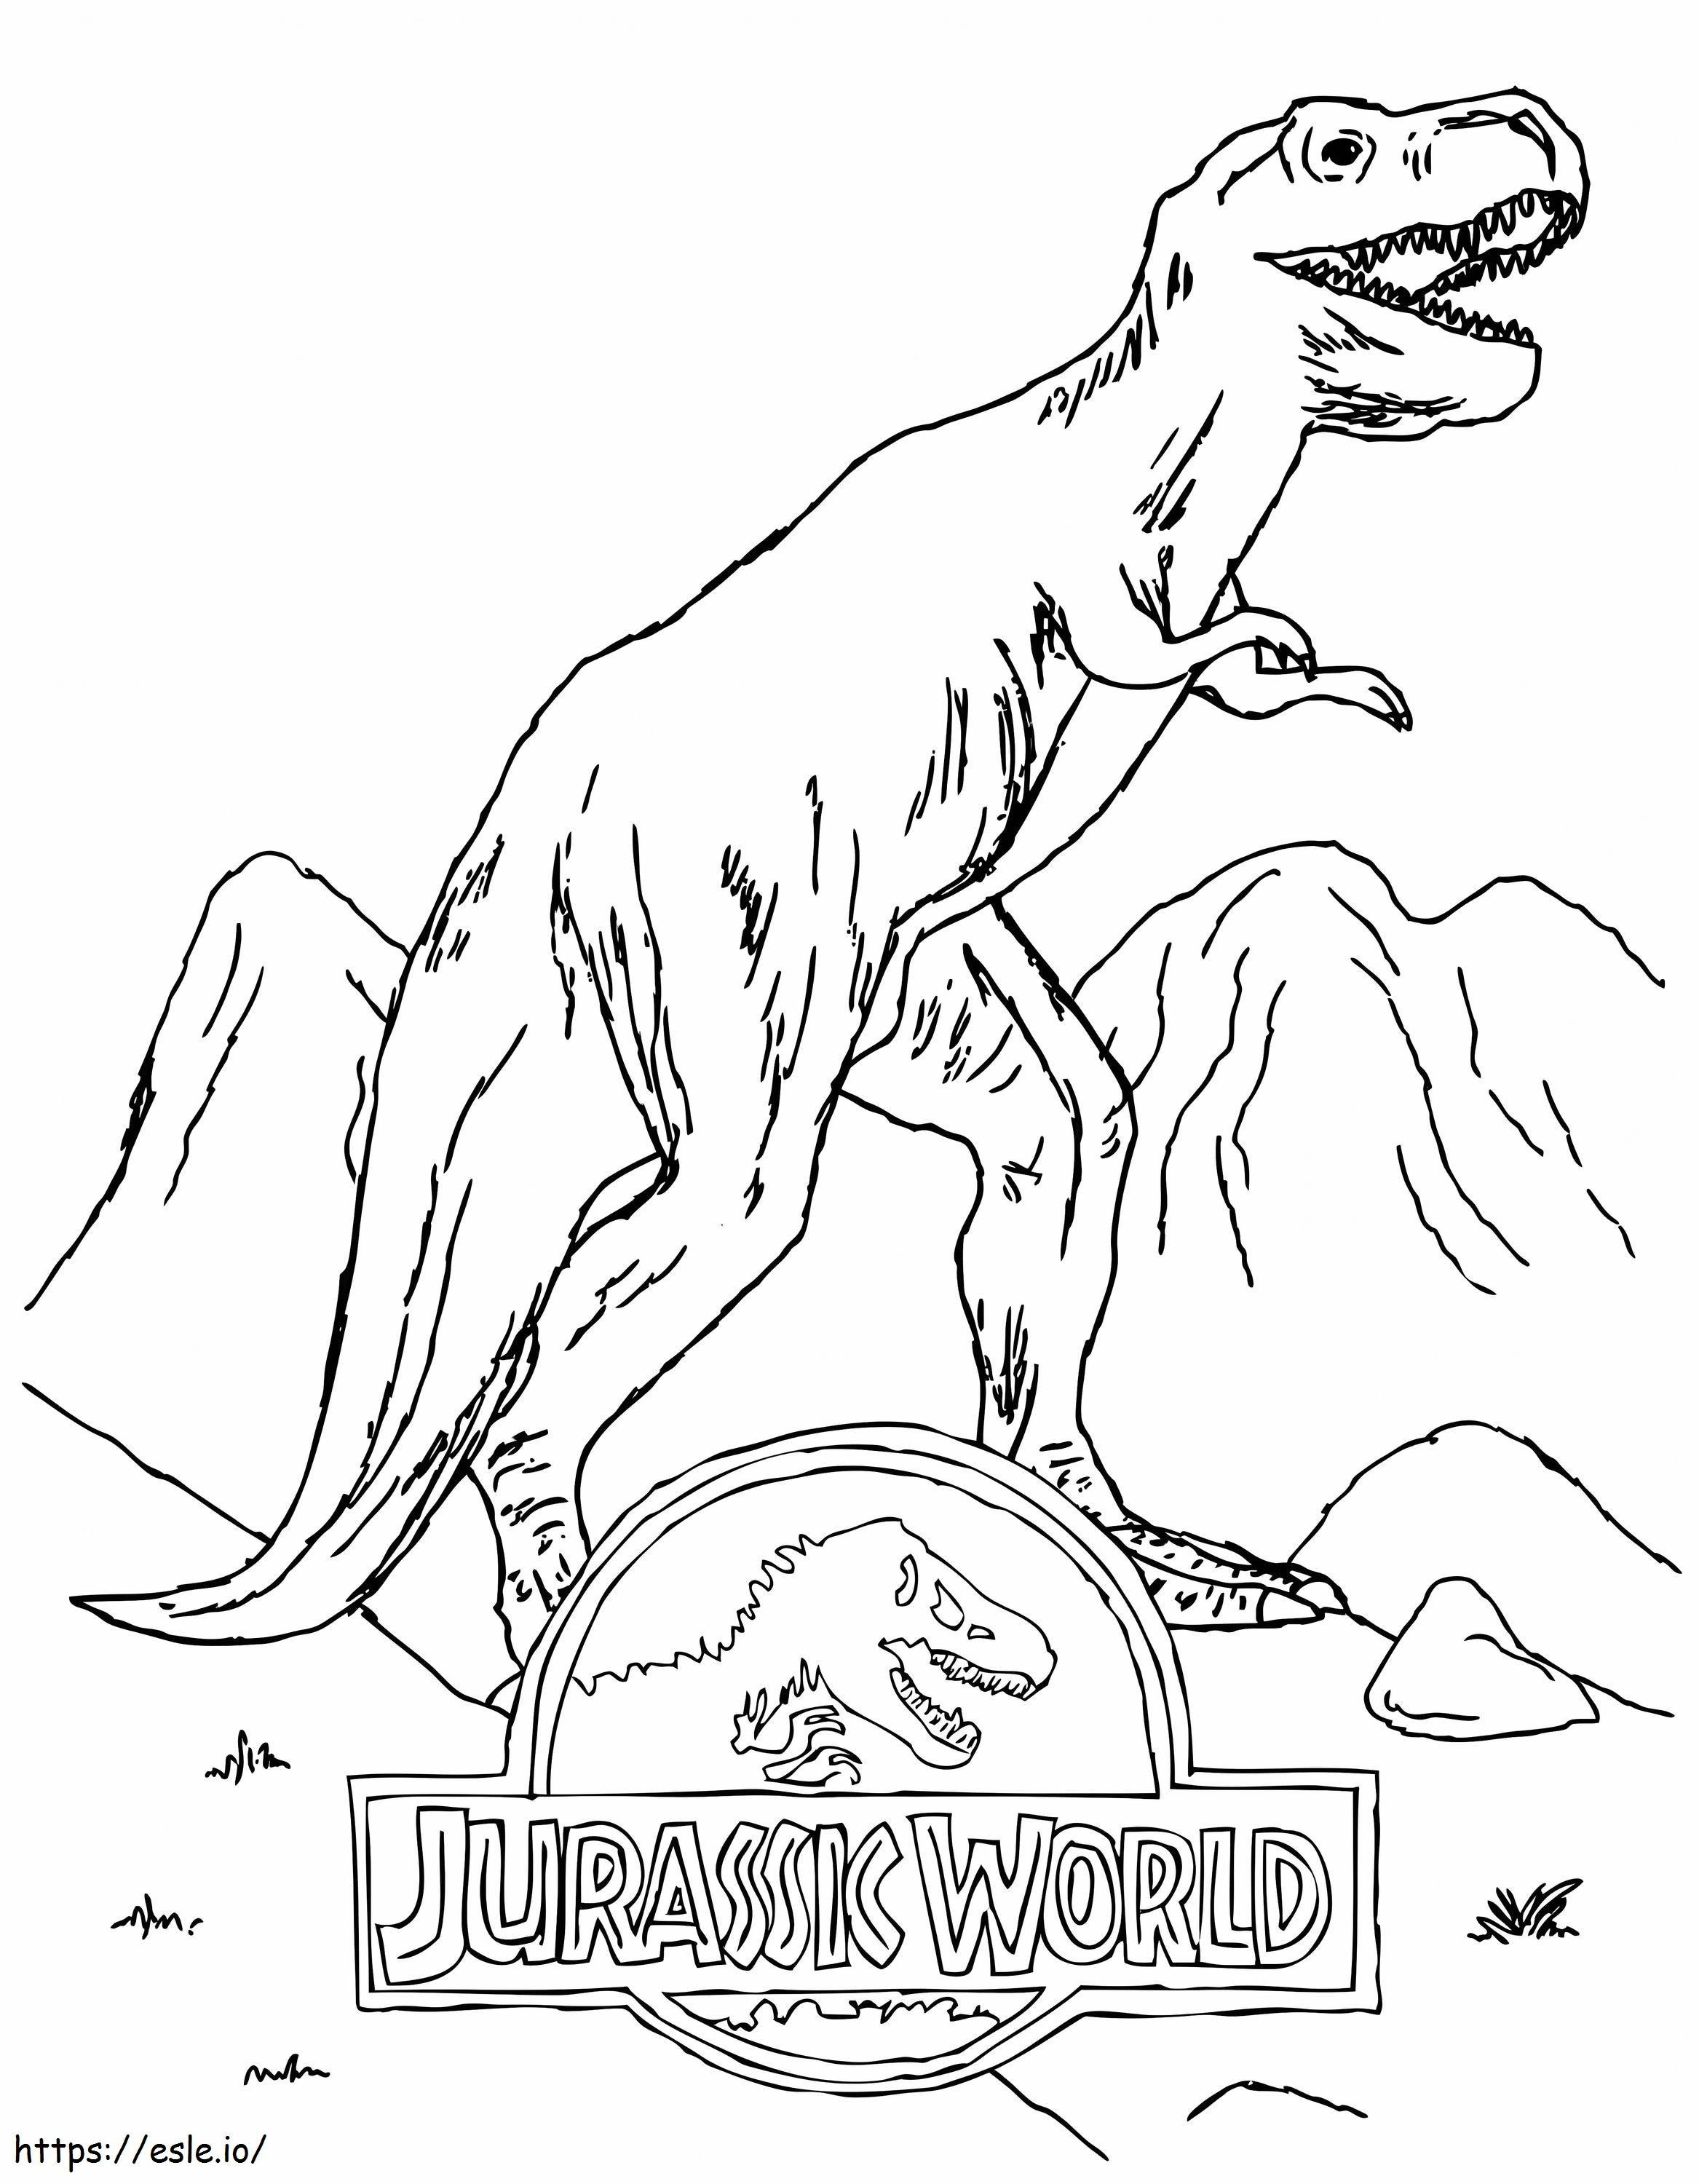 Logo Jurassic World cu T Rex de colorat